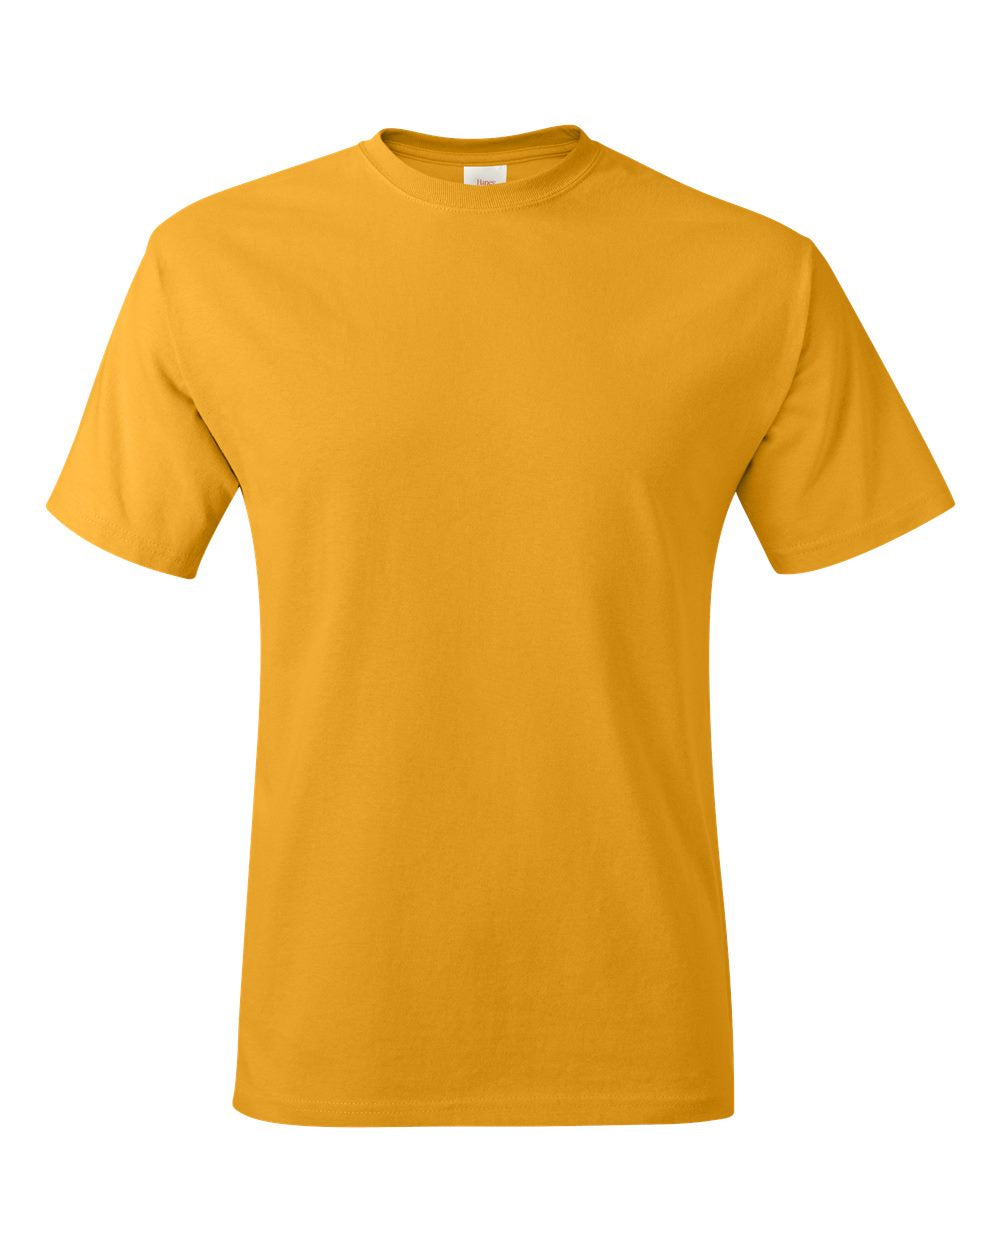 Hanes - Authentic T-Shirt - 5250